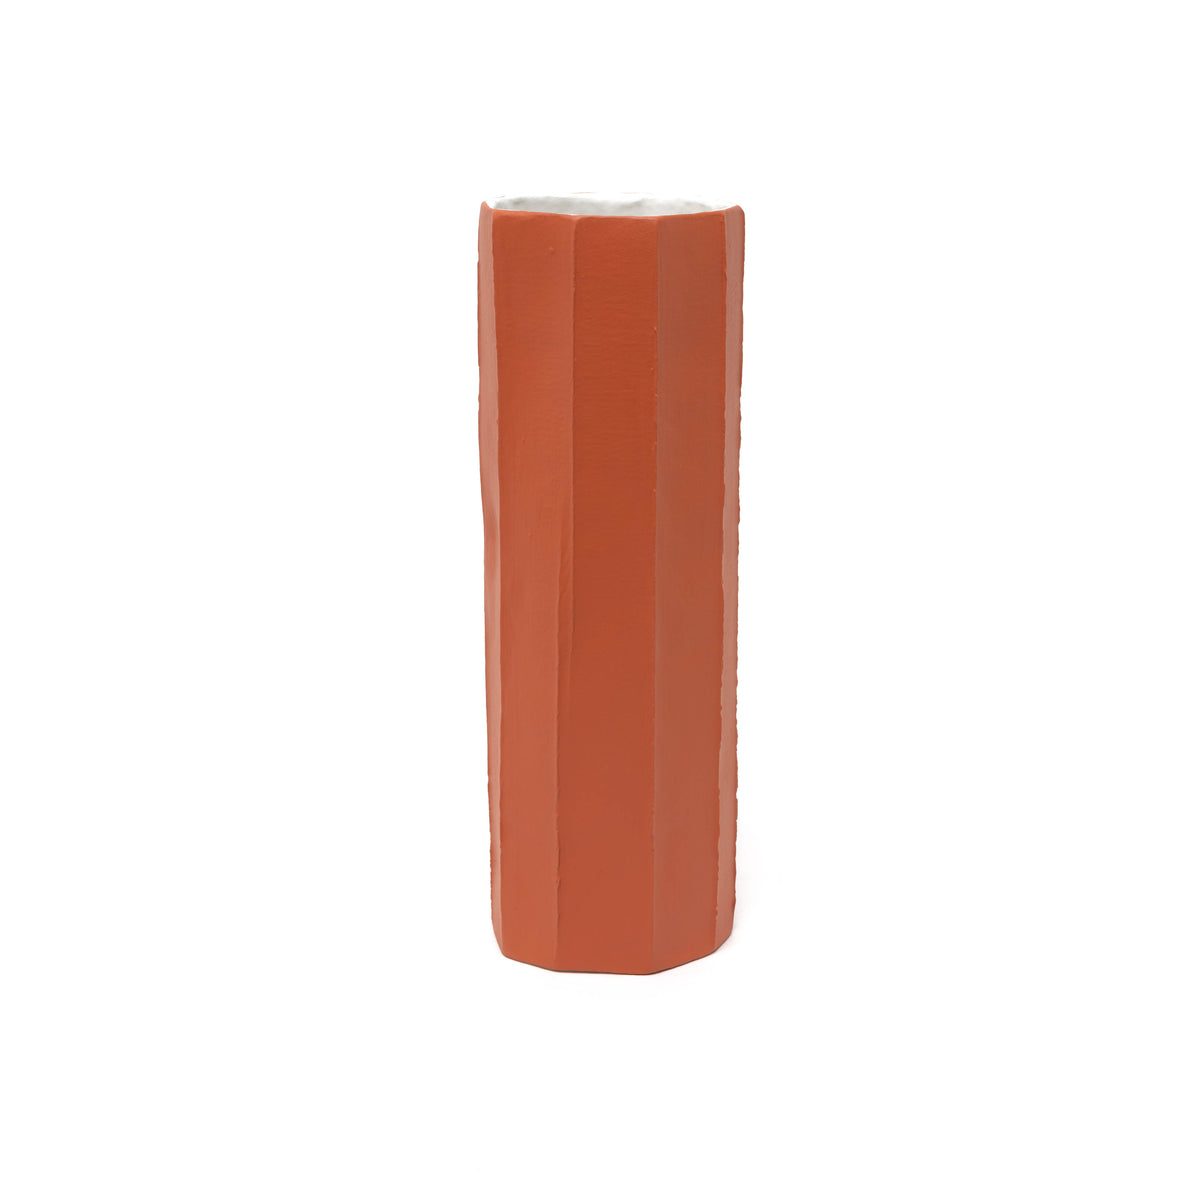 Mono vase paperclay H28, D18